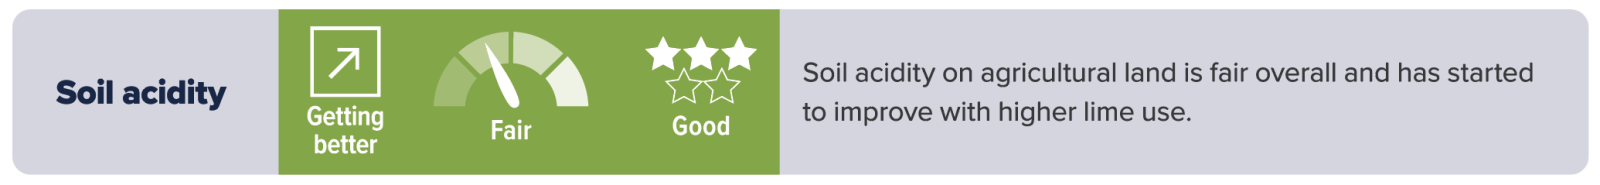 Land soil acidity